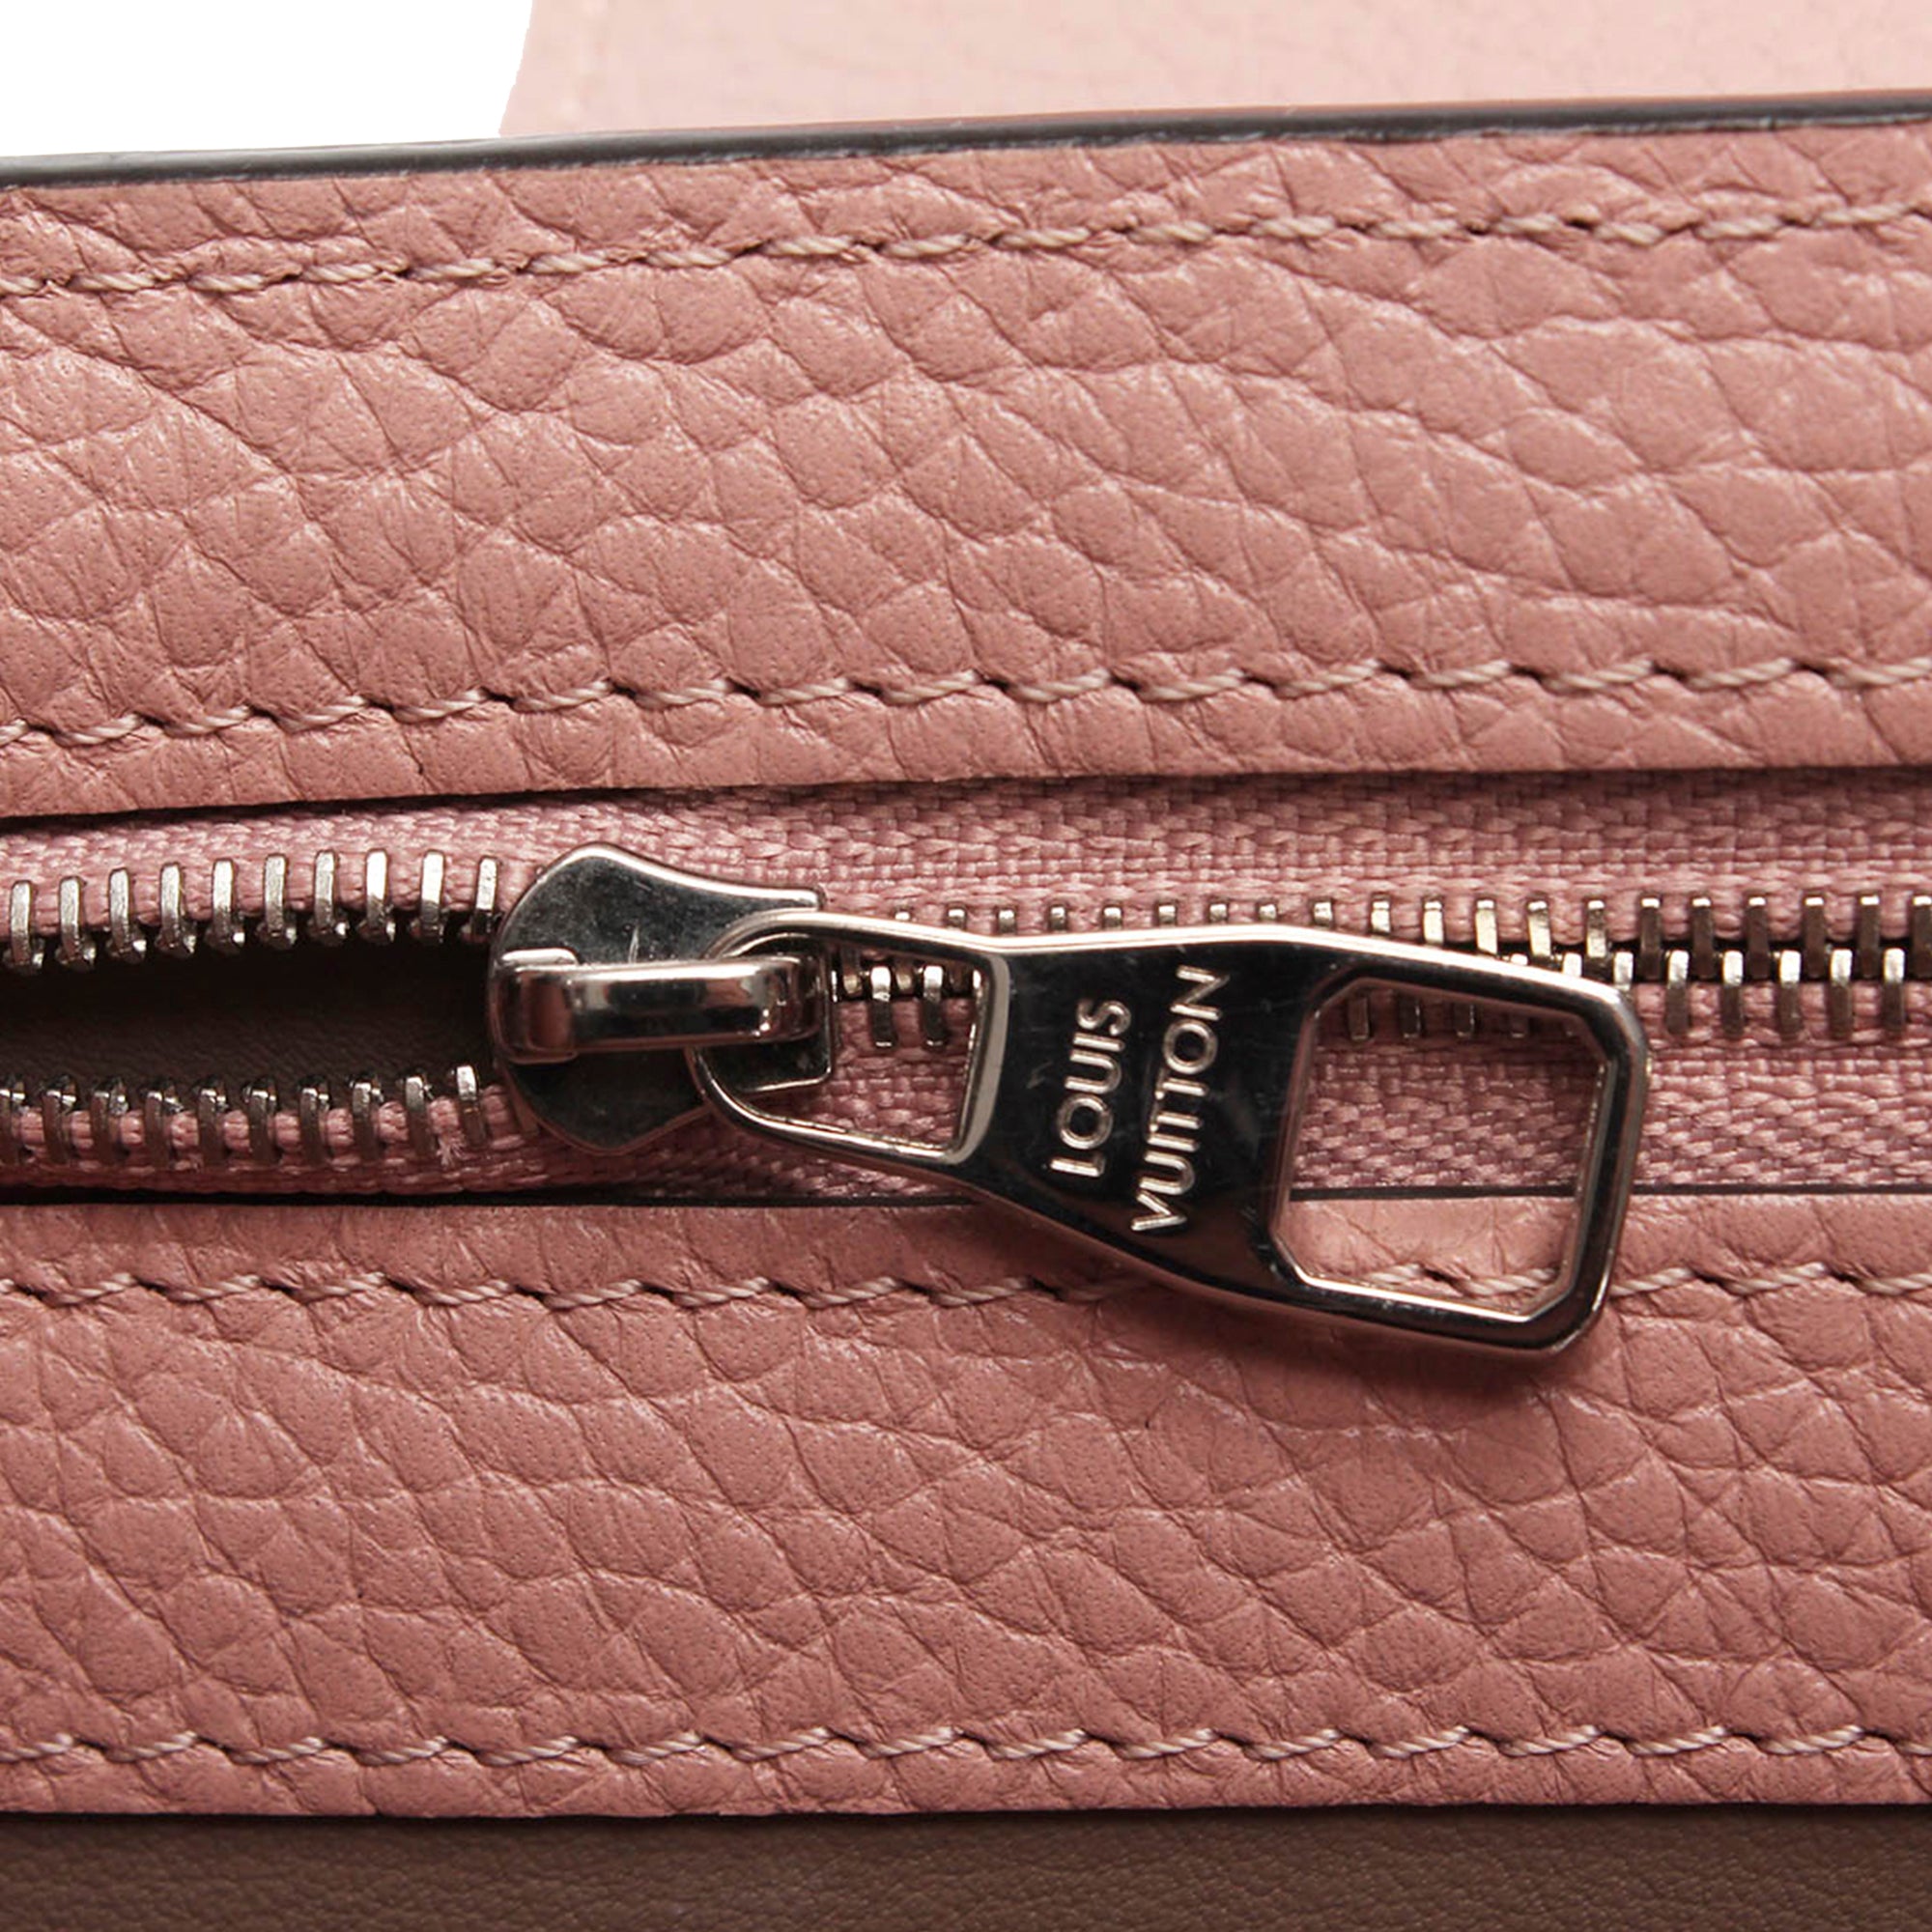 Louis Vuitton Capucines Handbag 400532, Pre-owned Prorsum Petal Crossbody  Bag